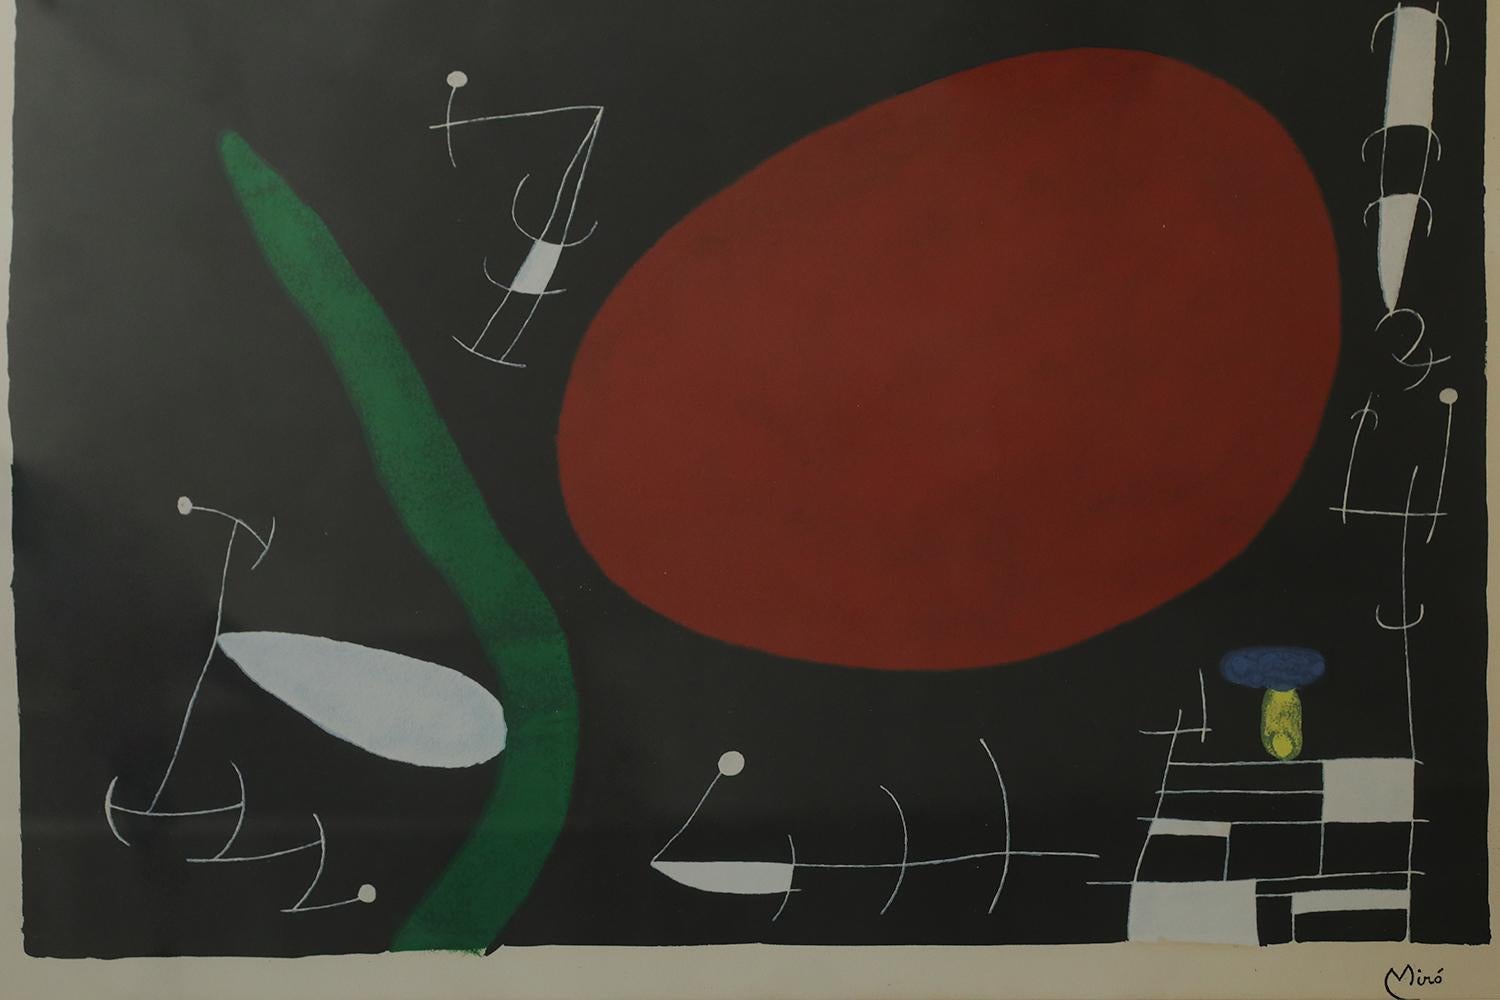 Joan Miró, Soleil et Étincelles, 1960s
Color lithography
Work signed in print
Work dimensions 58/74
The work is framed

This lithograph appeared in the collection Derriére le Miroir 164/165. L'Oiseau Solaire, L'Oiseau Lunaire, Etincelles published